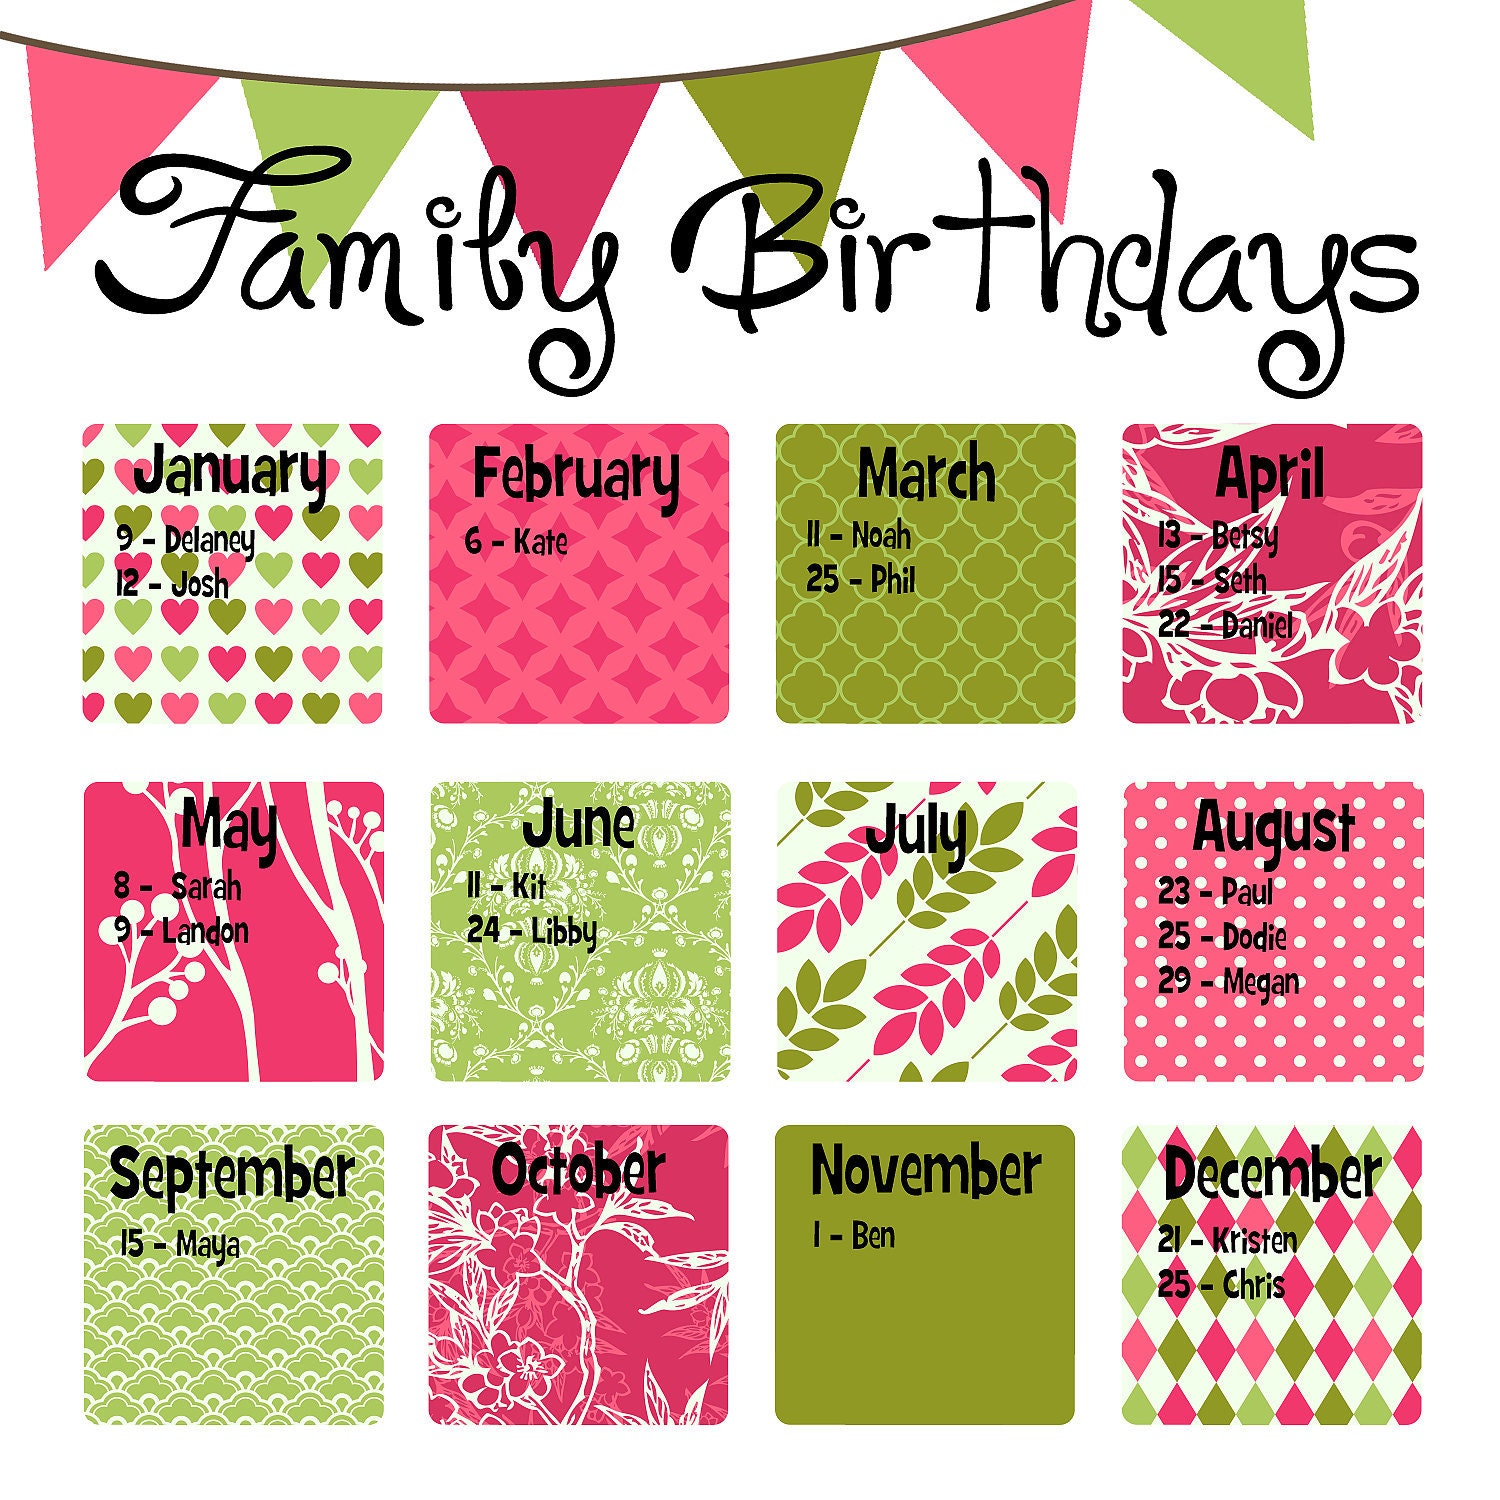 family-birthday-calendar-digital-copy-you-print-in